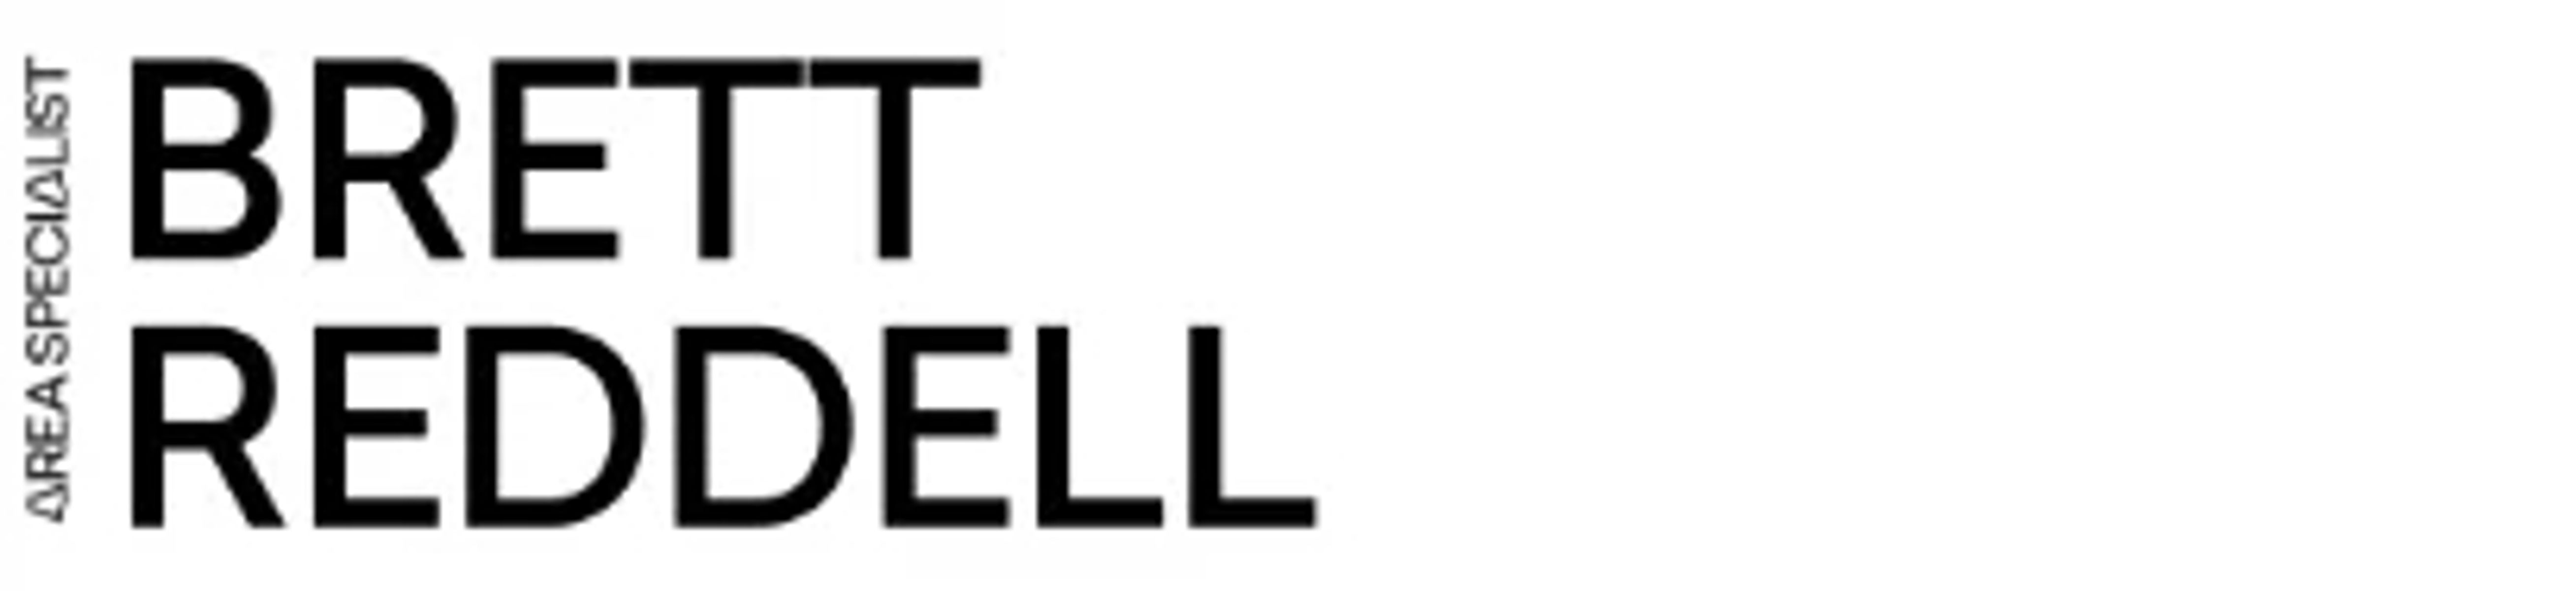 Brett Reddell's logo